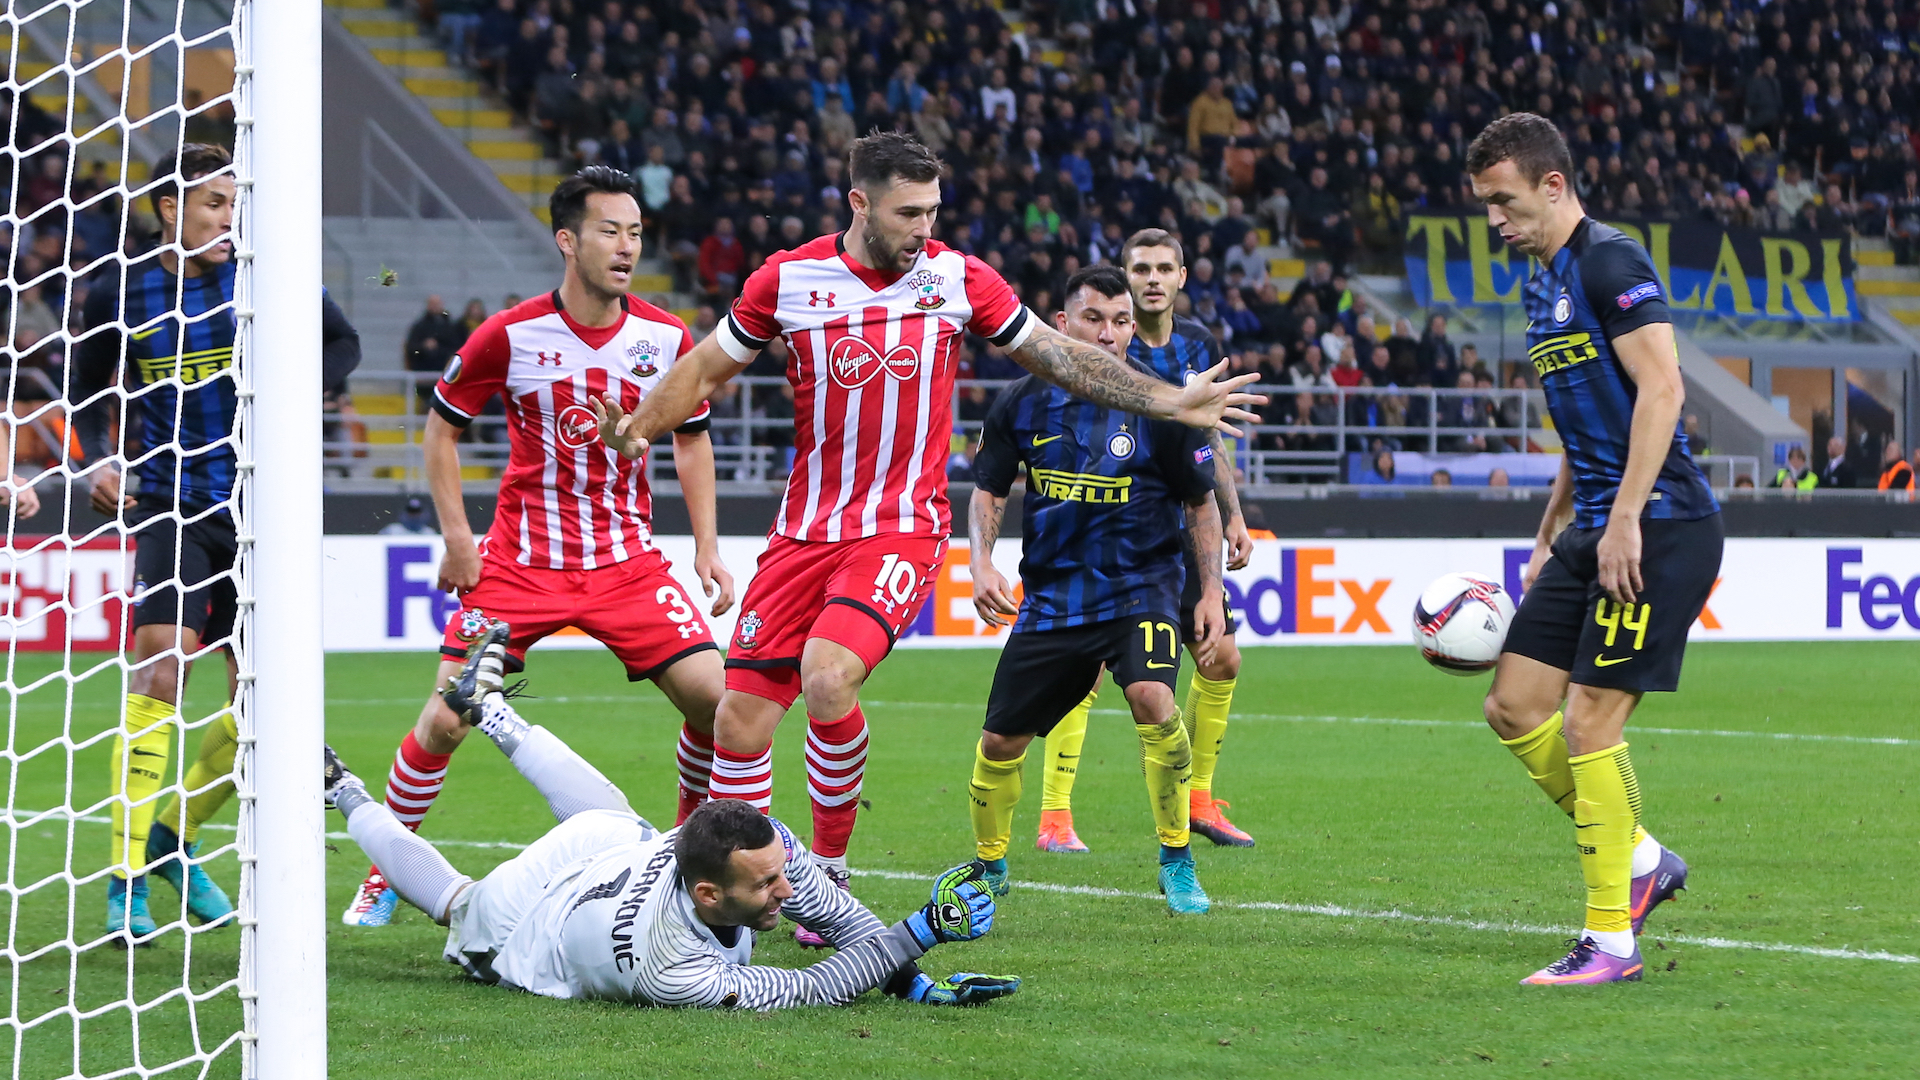 Samir Handanovic saves goal during the football match versus FC Inter 